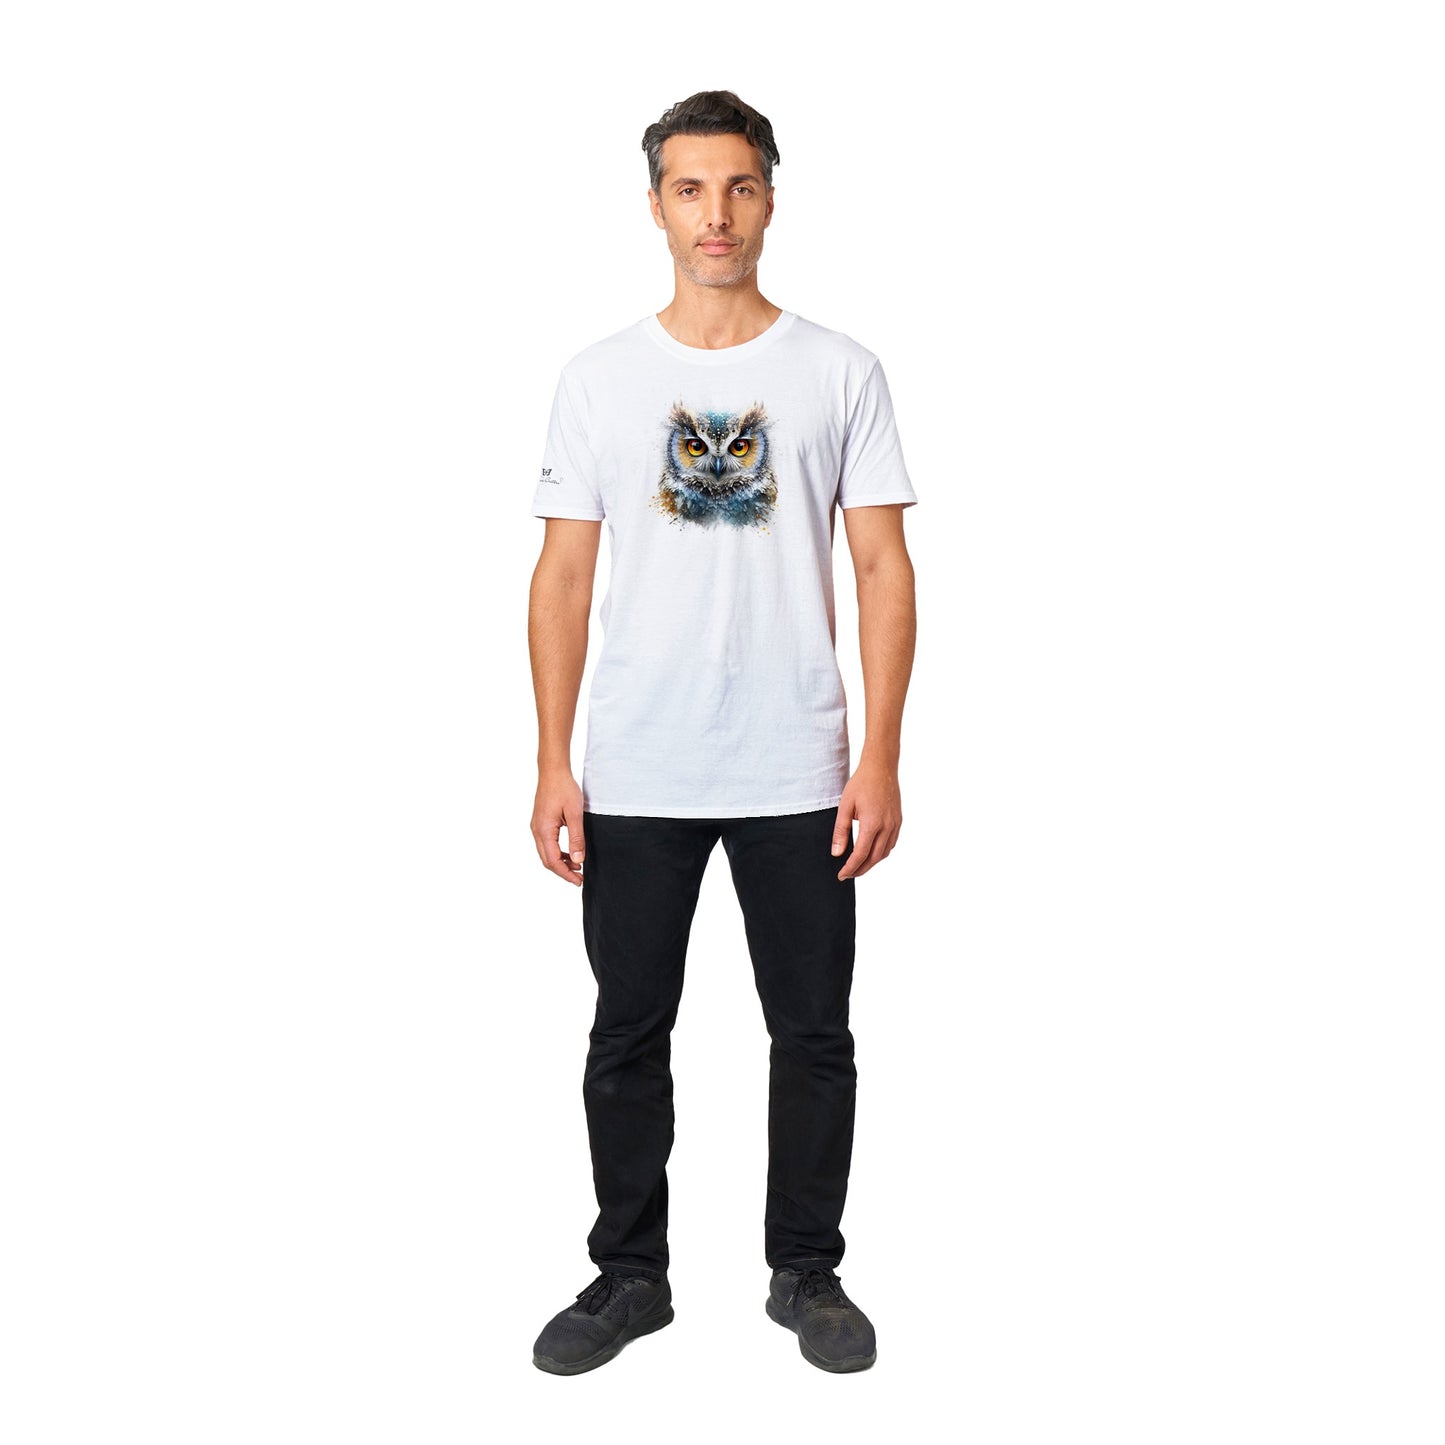 Glittered Fantasy Owl - Unisex Crewneck T-shirt